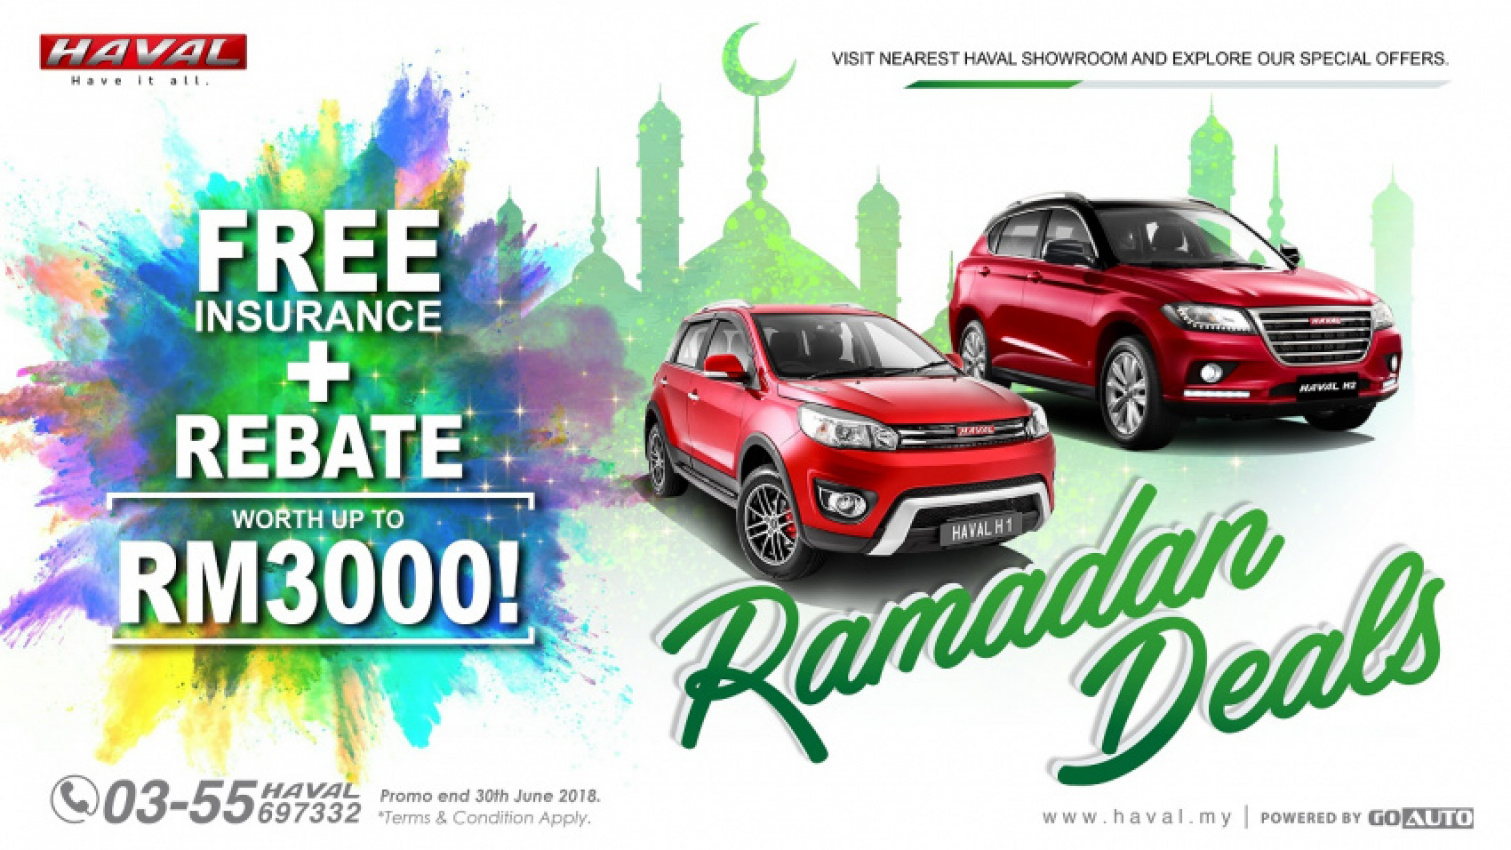 autos, car brands, cars, haval, ram, promotion, haval ramadan deals